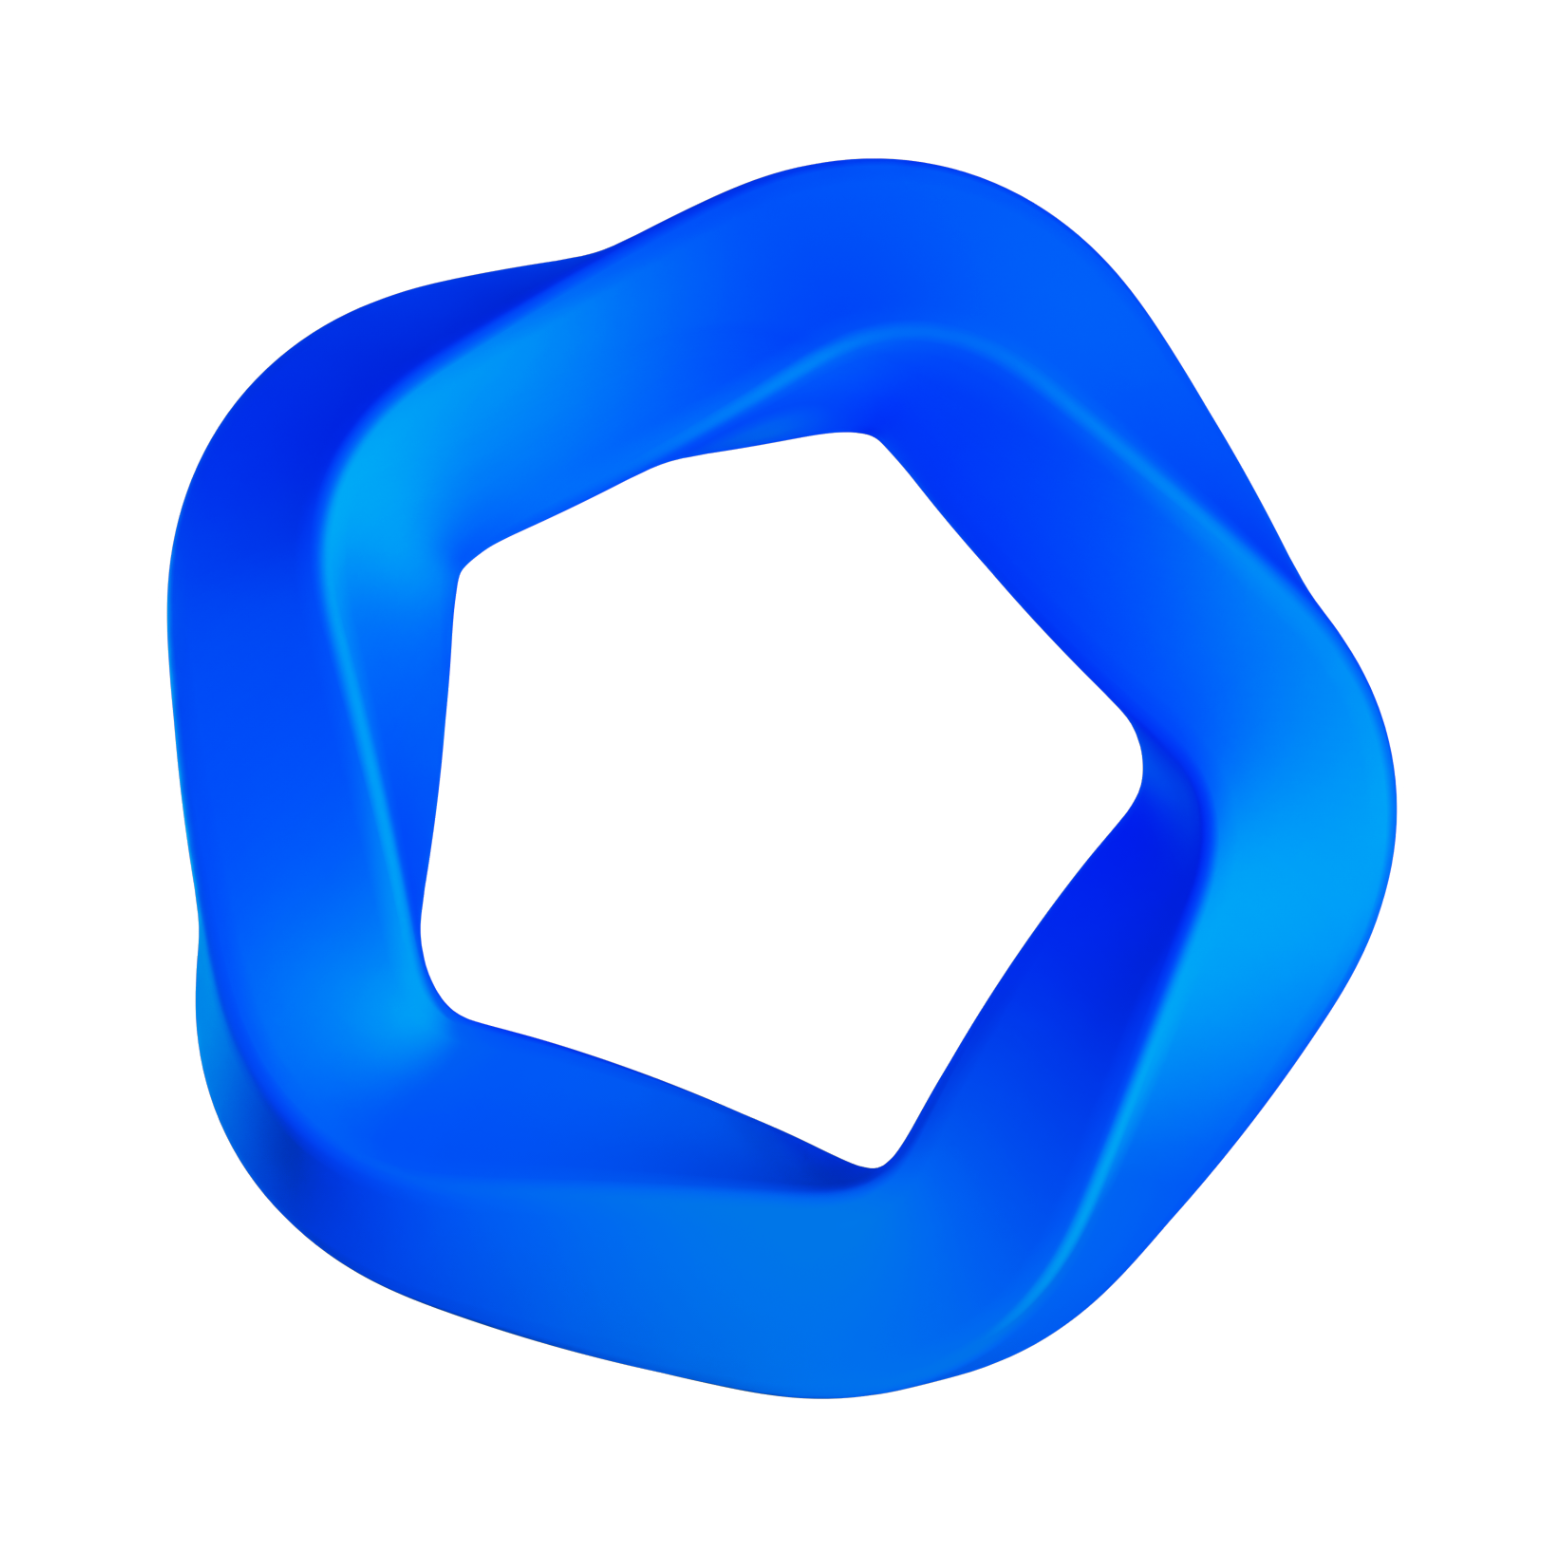 The Visualizer logo